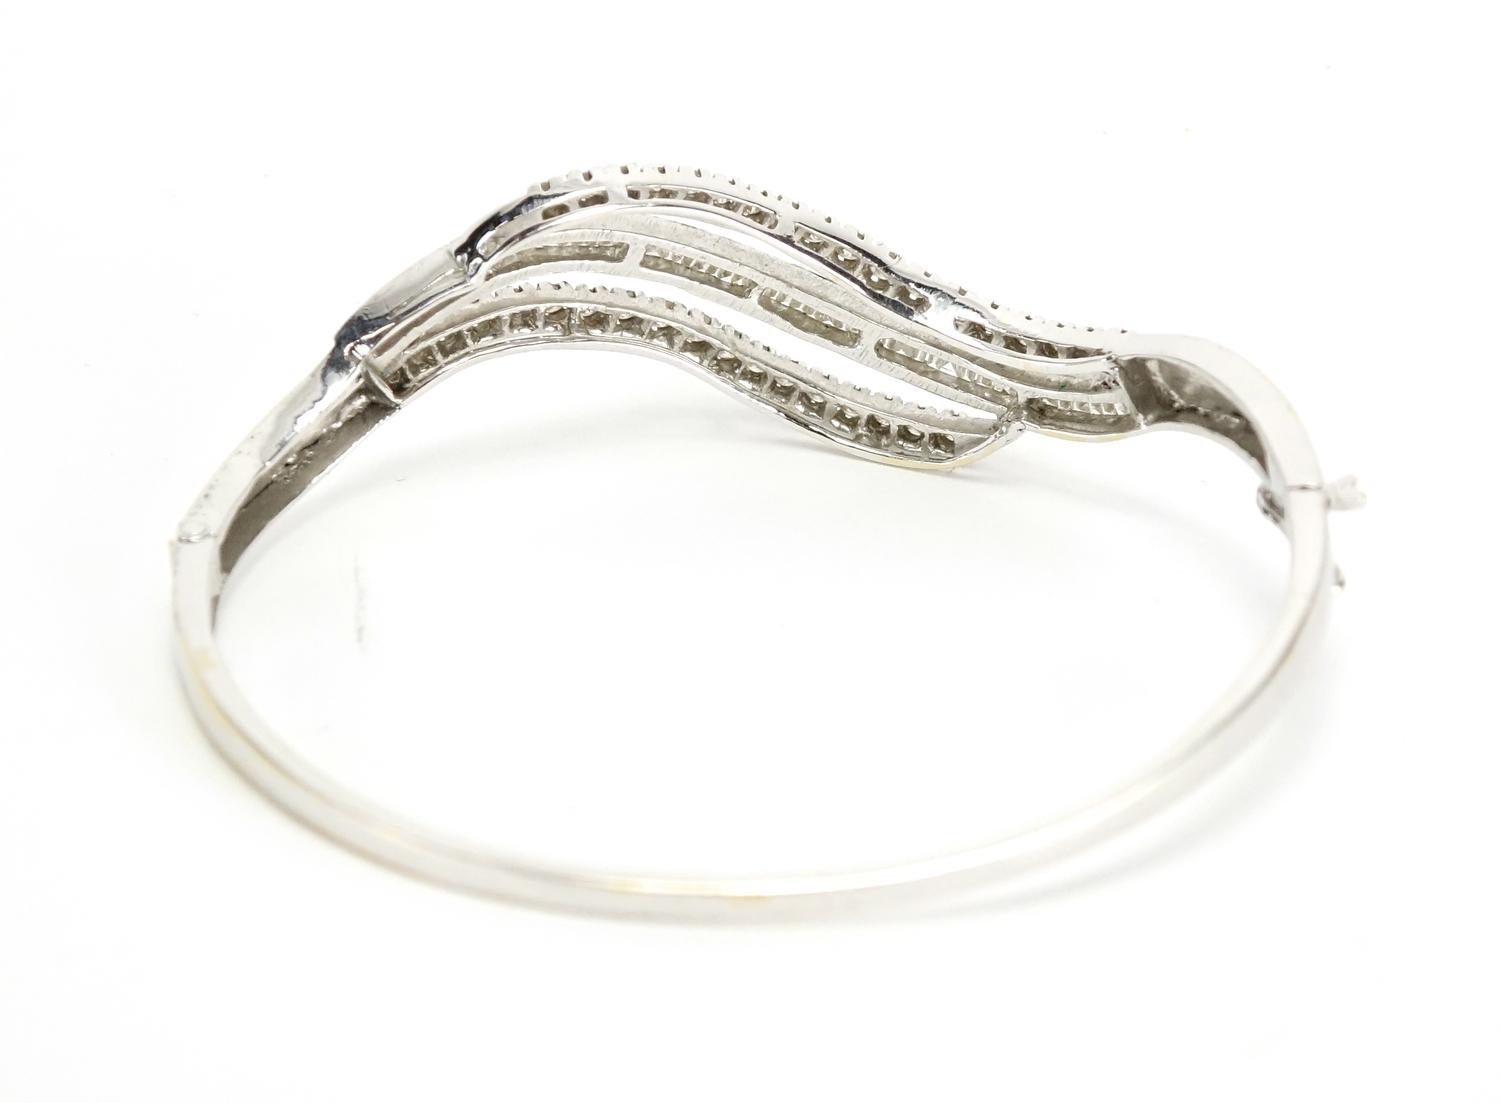 18ct white gold diamond bracelet, approximately 2.26 carat of diamonds, approximate weight 19.6g : - Image 2 of 3